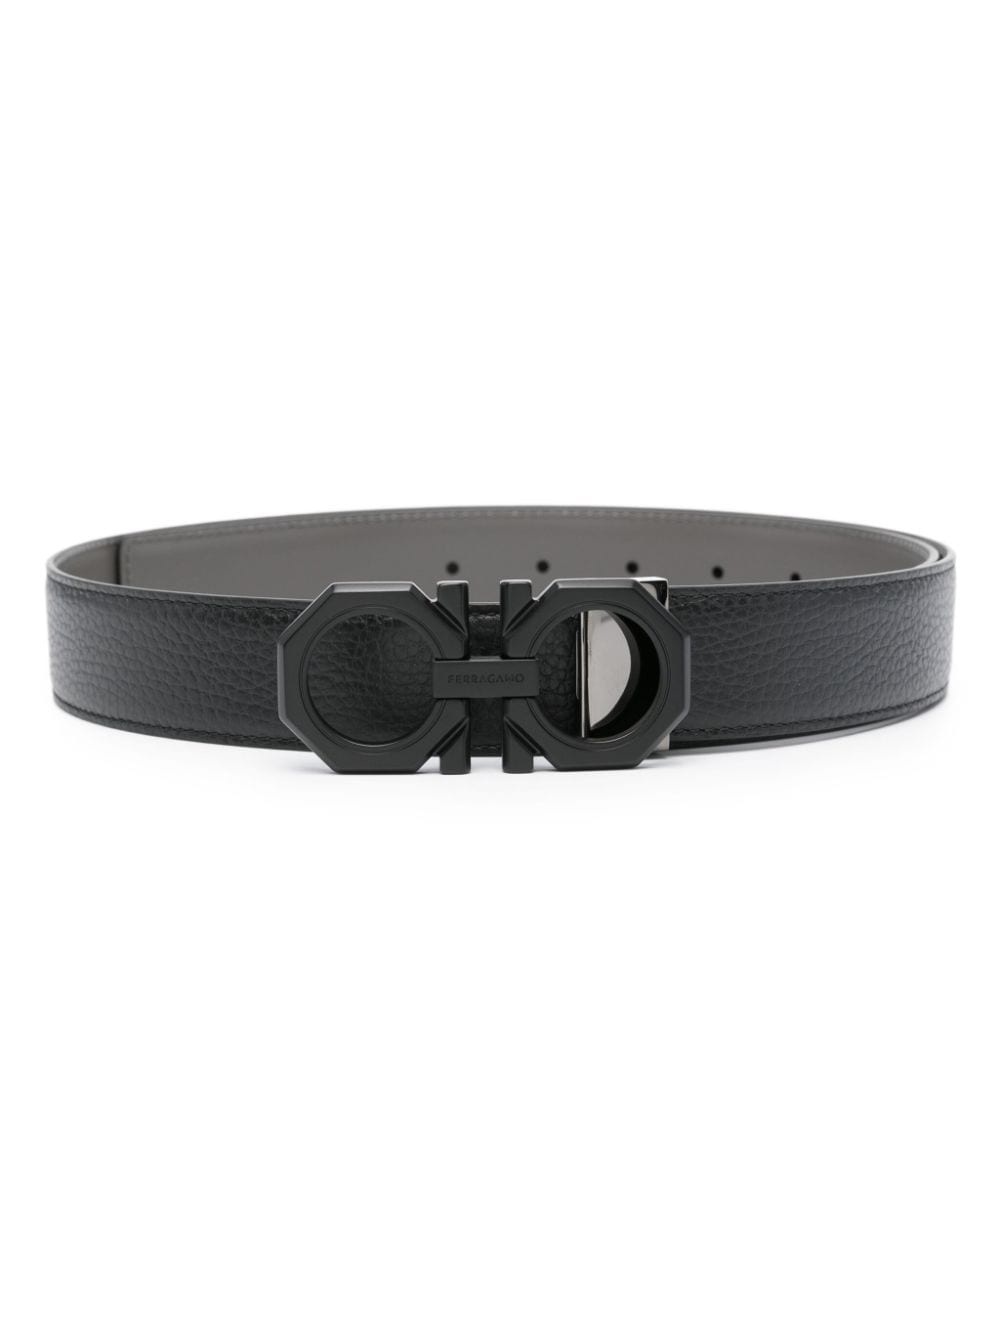 Gancini leather belt